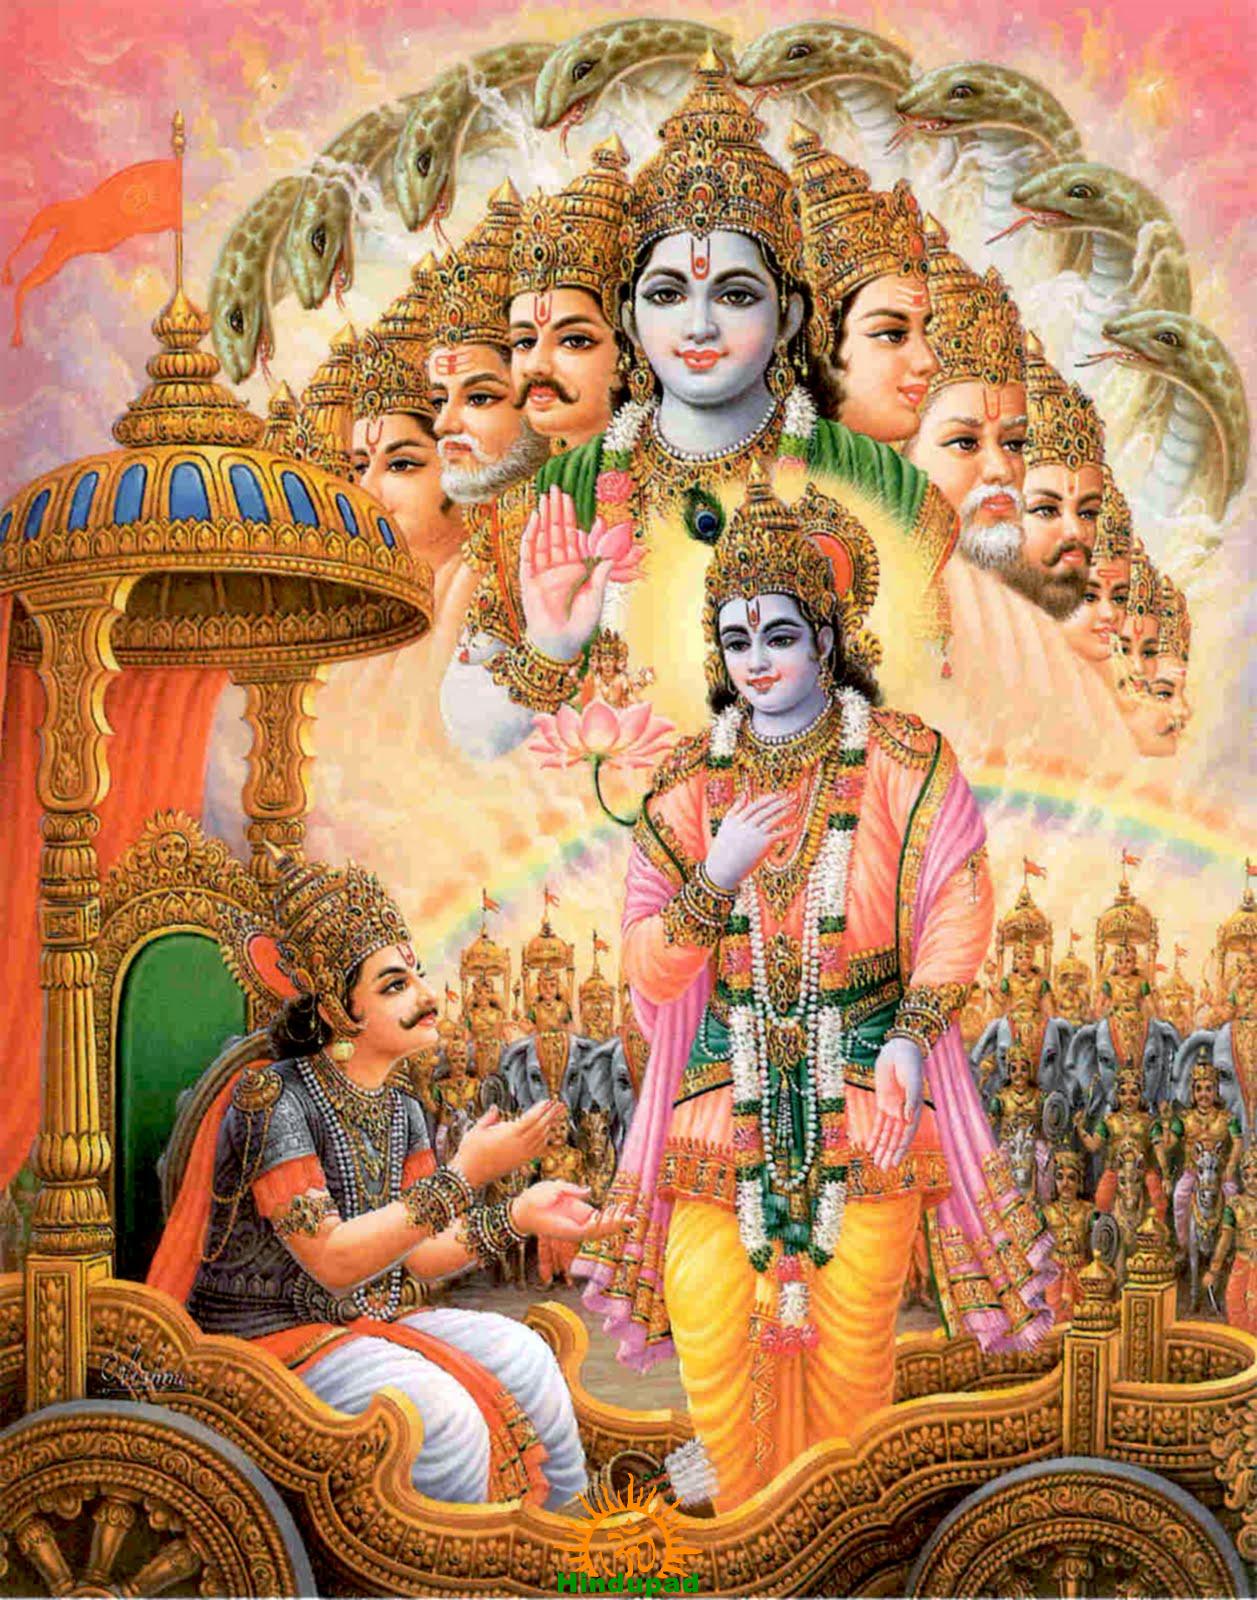 https://hindupad.com/wp-content/uploads/2013/03/Lord-Krishna-preaching-Bhagavad-Gita.jpg